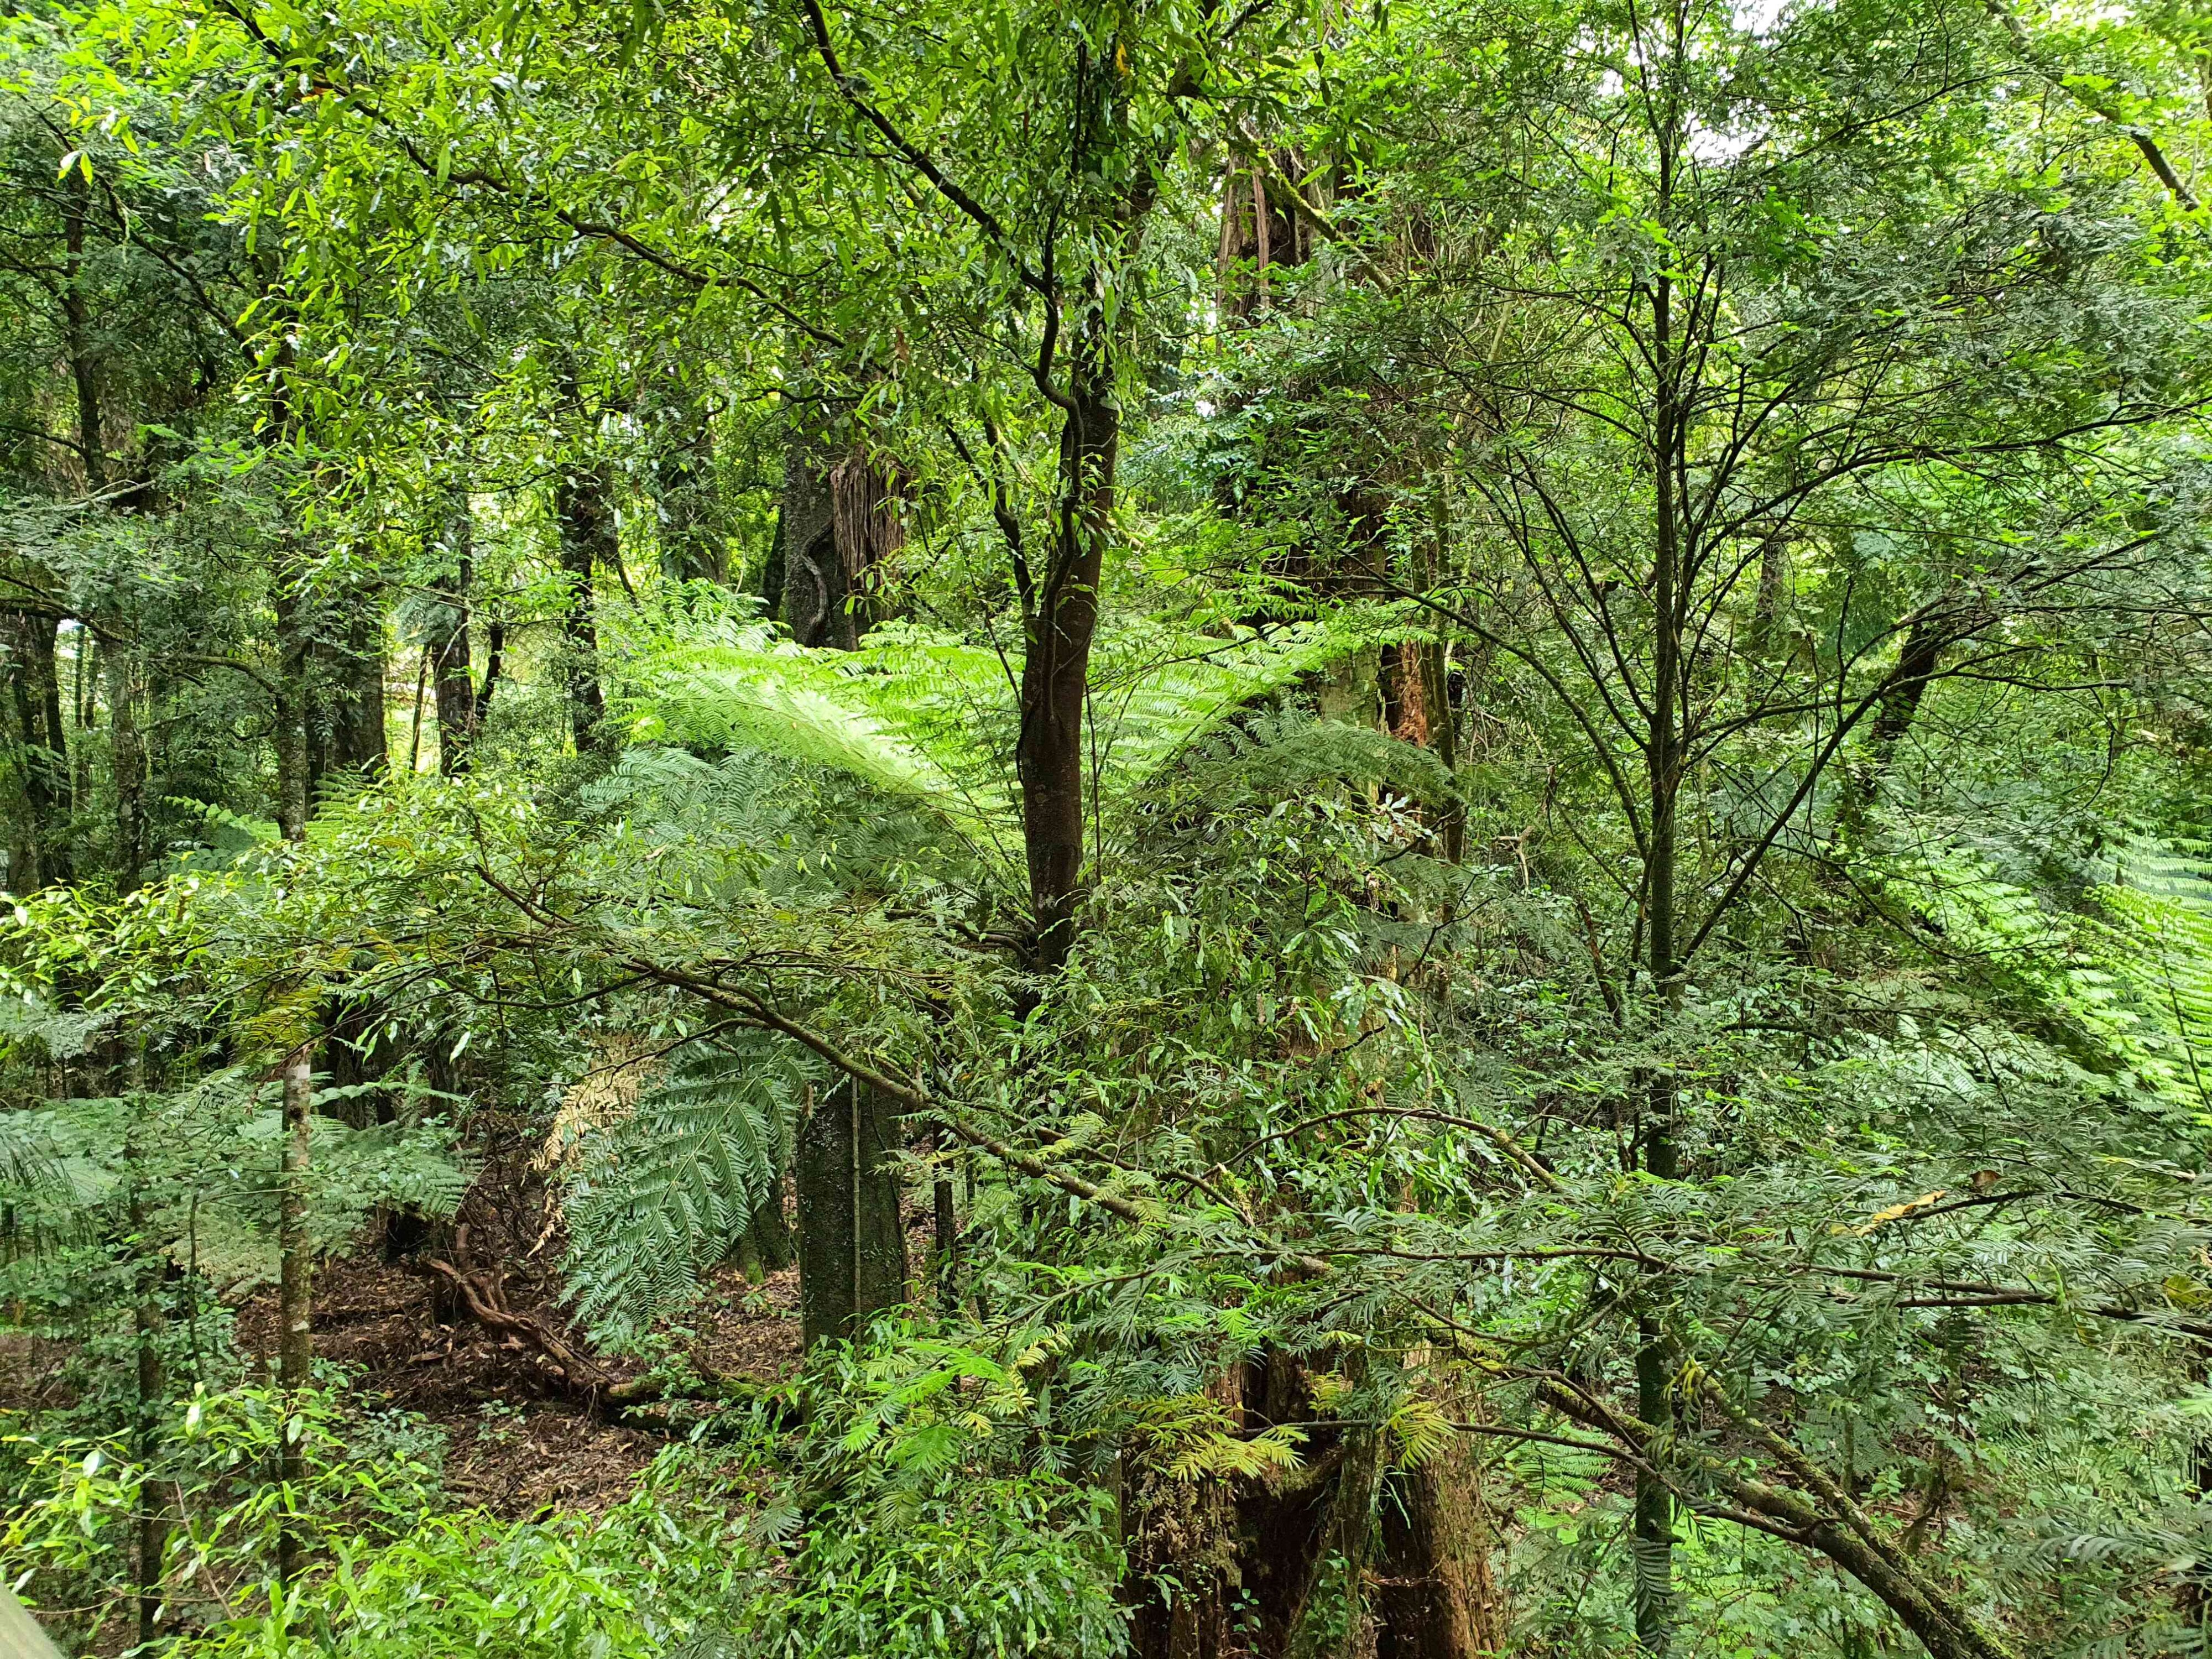 A photo of the forest at Sanctuary Mountain, Maungatautari, Waikato, New Zealand.